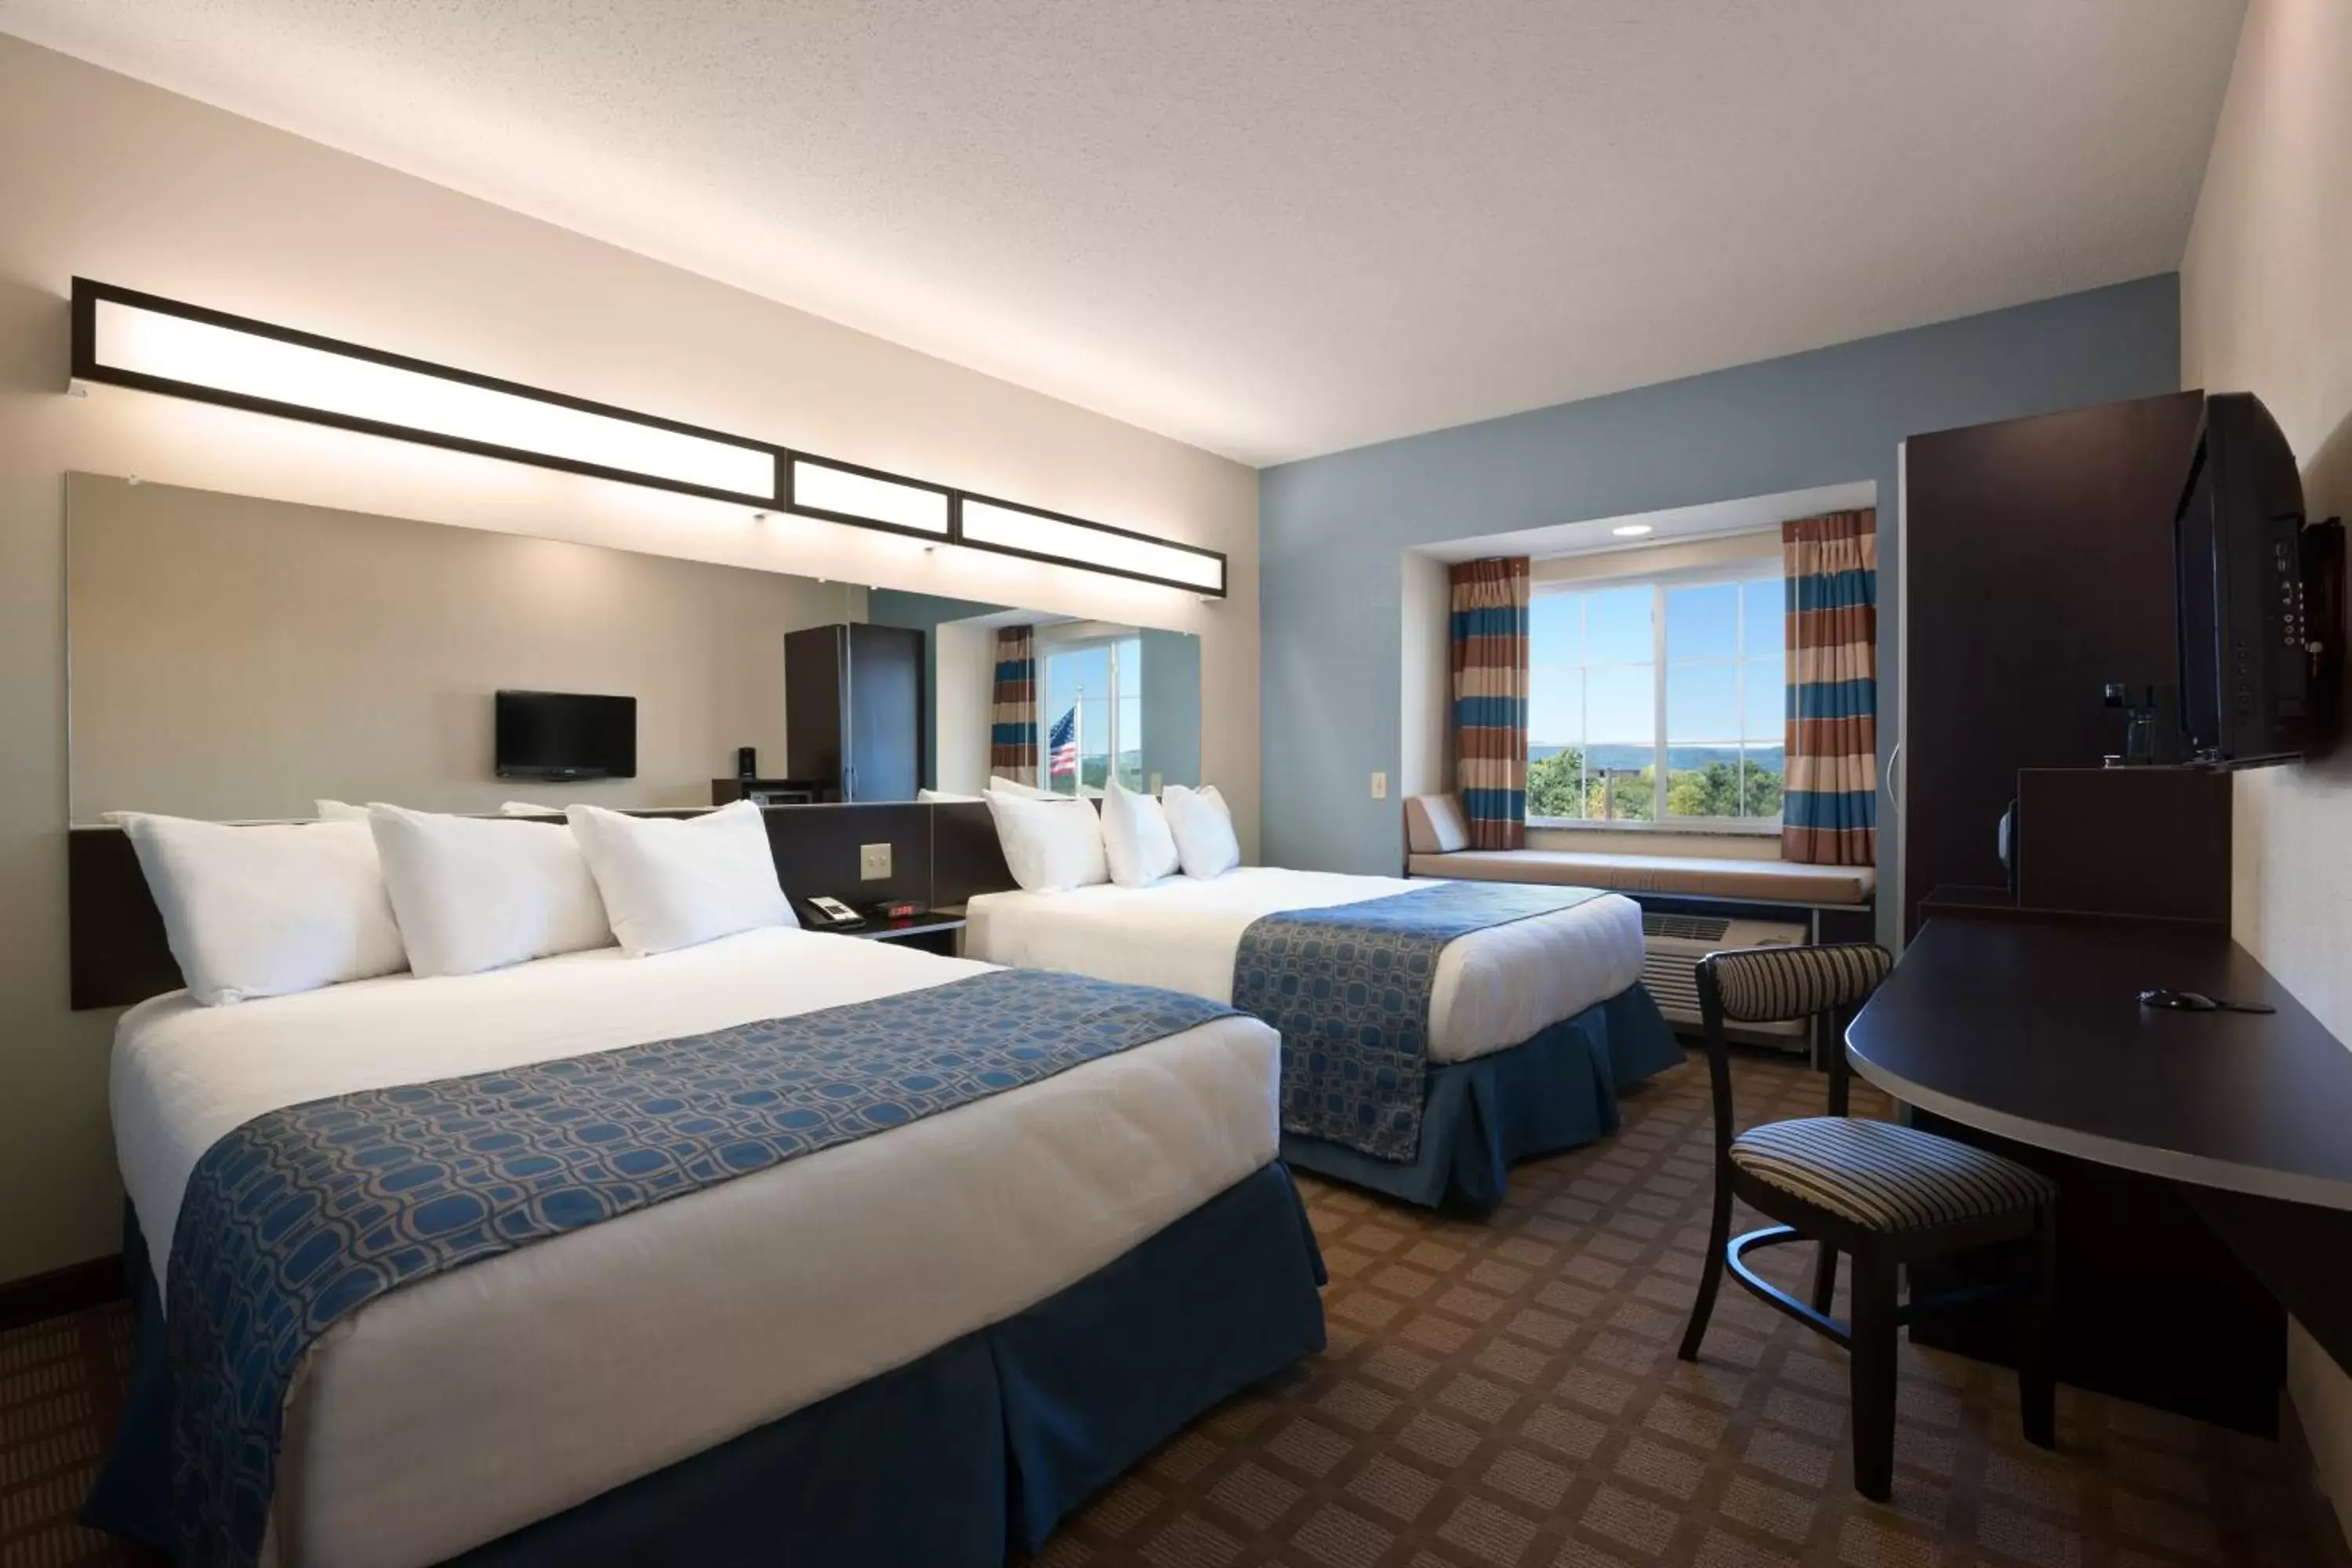 Bed, Room Photo in Microtel Inn & Suites by Wyndham Wilkes Barre